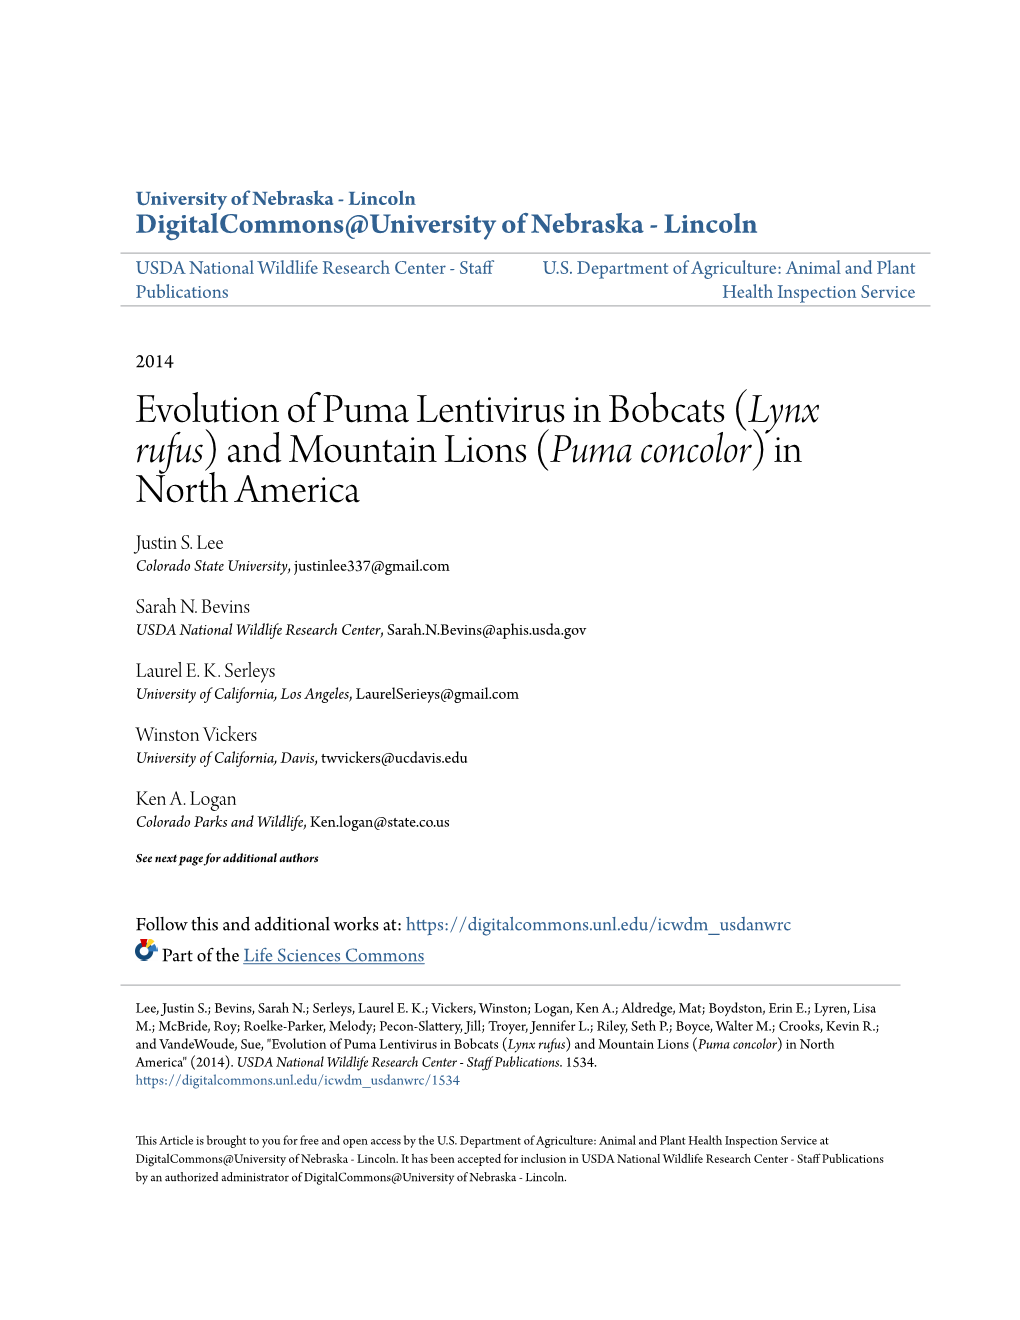 Evolution of Puma Lentivirus in Bobcats (Lynx Rufus) and Mountain Lions (Puma Concolor) in North America Justin S